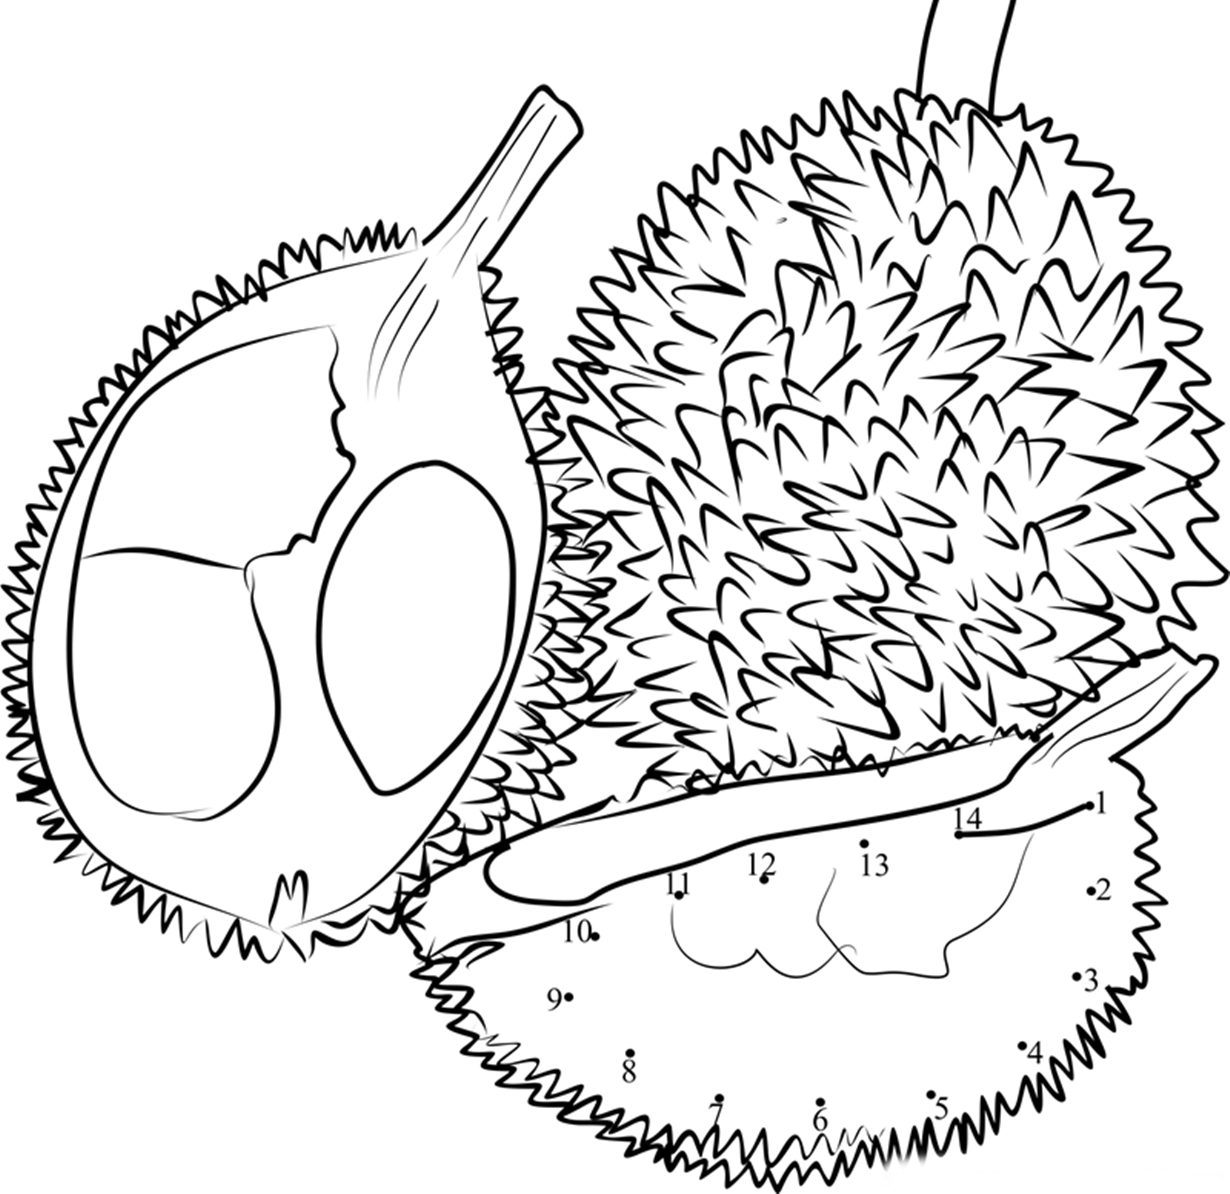  Gambar  Kartun  Pohon Durian  Bestkartun